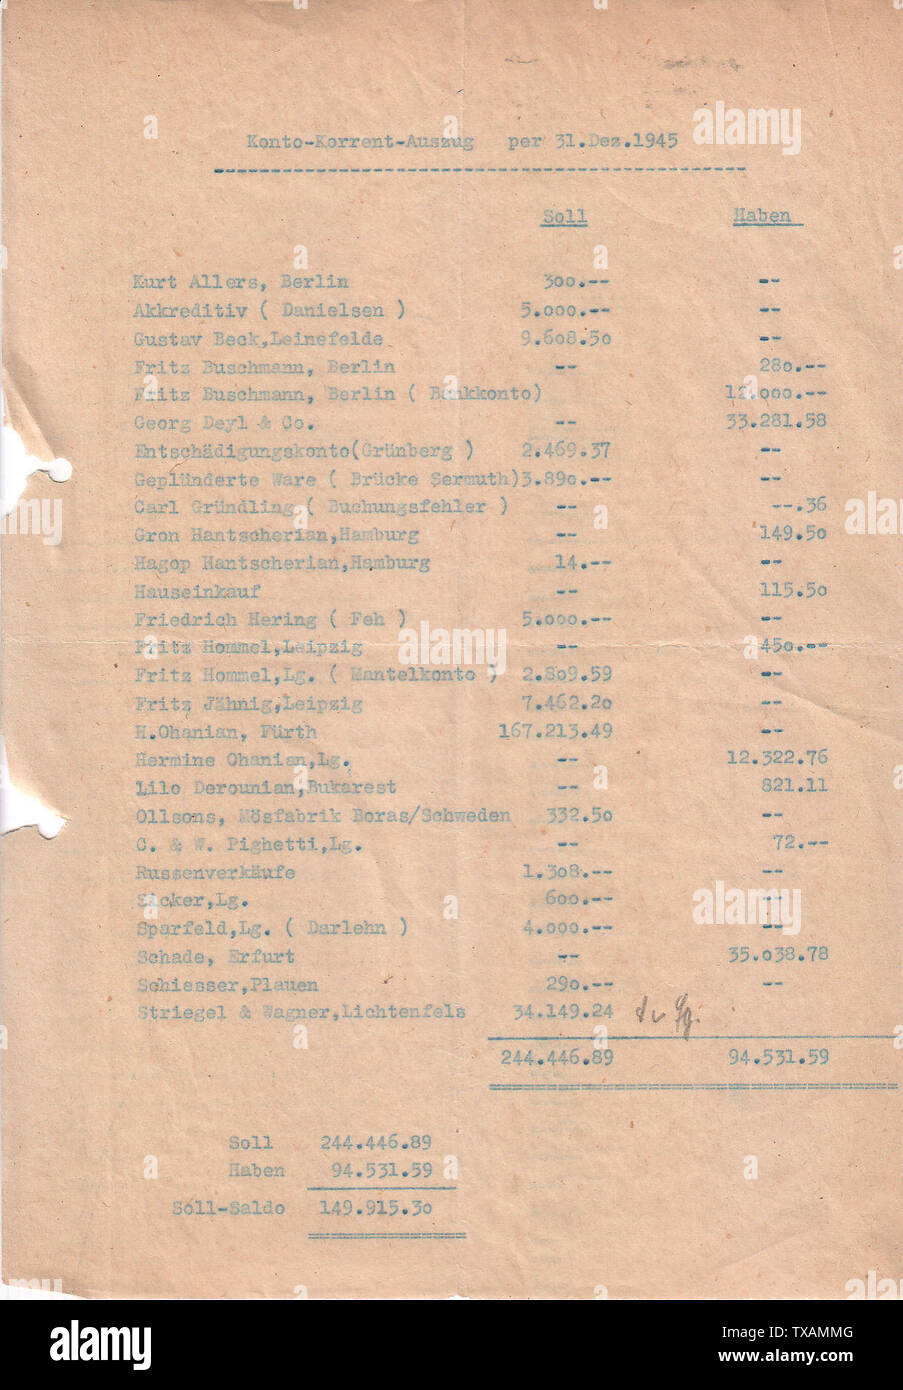 Ohanian Rauchwaren-Kommission, Neuanfang in der Bundesrepublik 1945, GeschÃ¤ftsunterlagen. Konto-Korrent-Auszug per 31. Dezember 1945.; 31 December 1945; Collection G. & C. Franke; Rifra (talk) 11:01, 26 March 2016 (UTC); Stock Photo